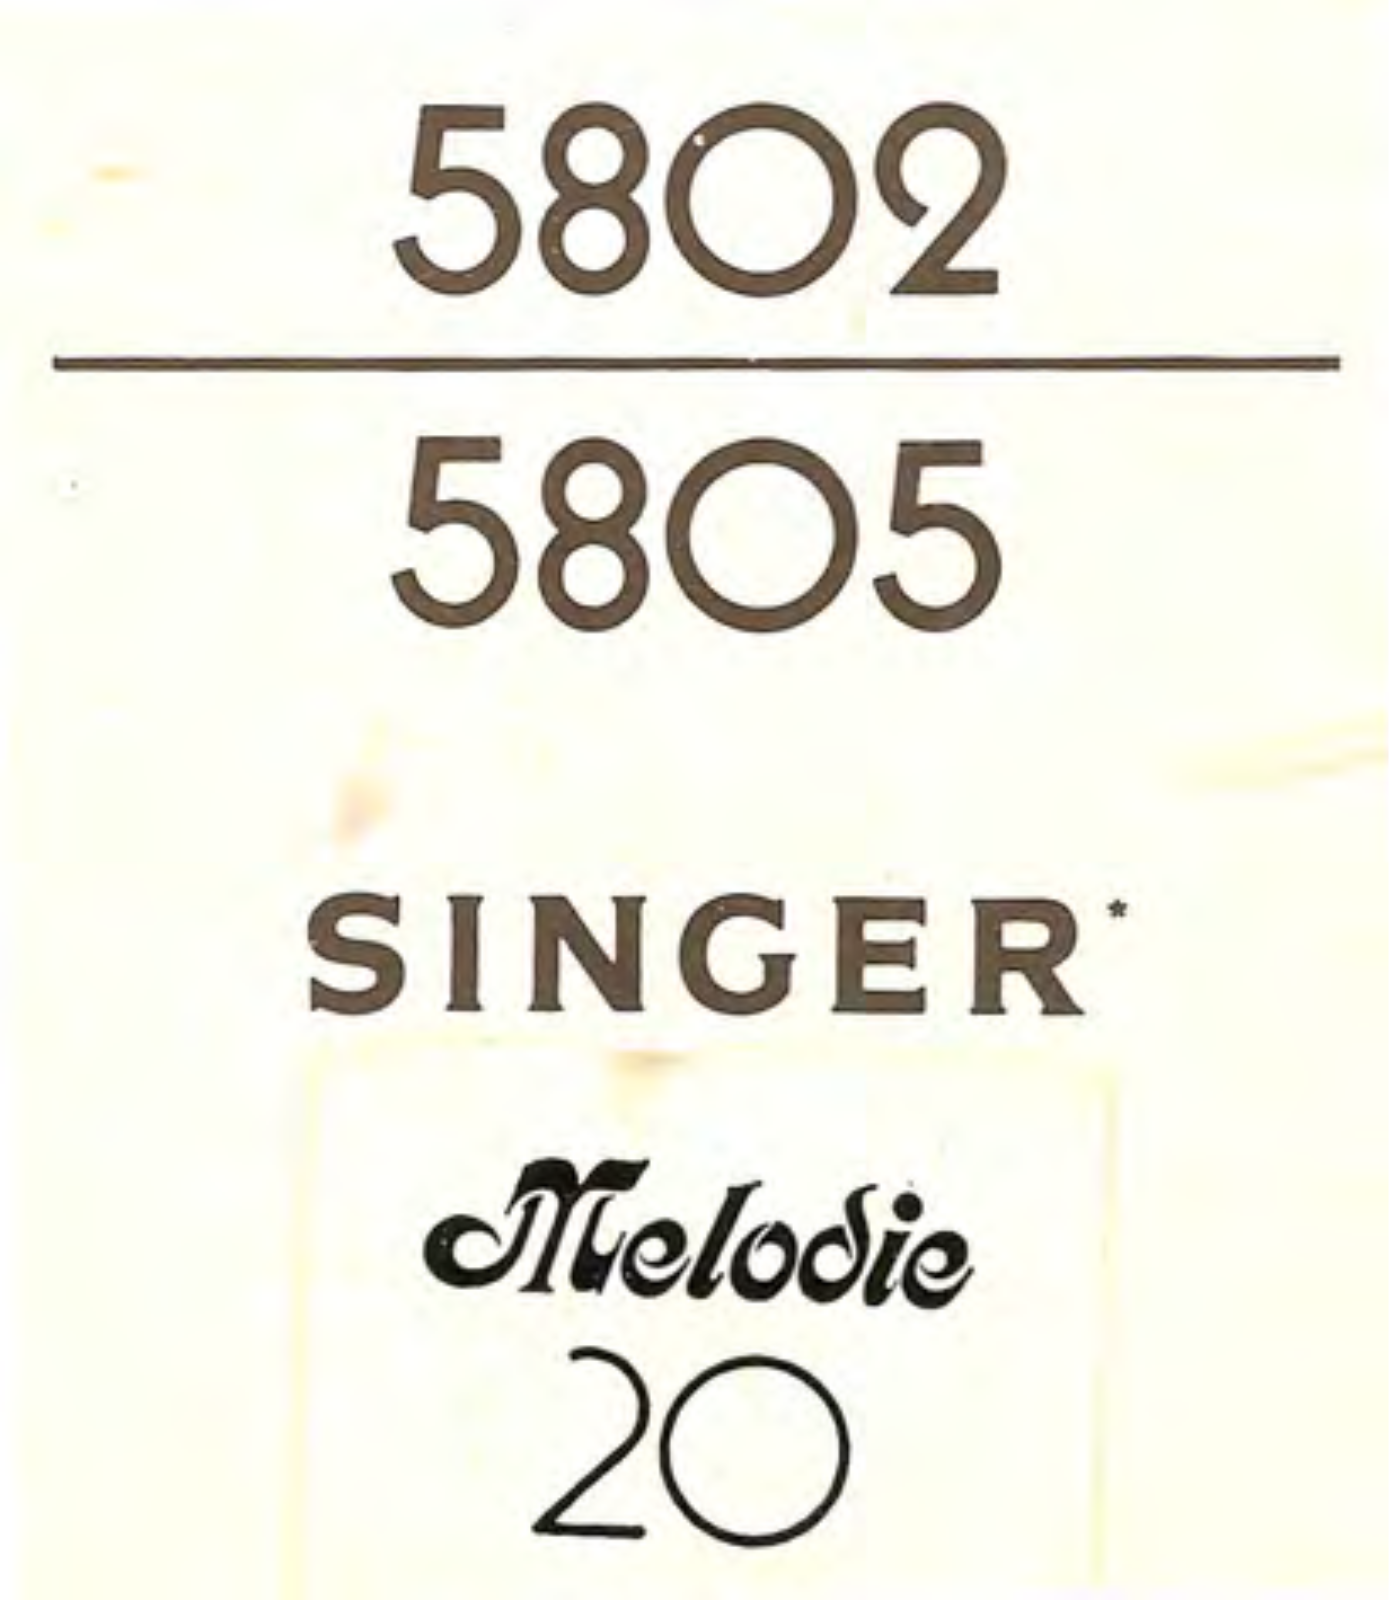 SINGER Melodie 20 User Manual